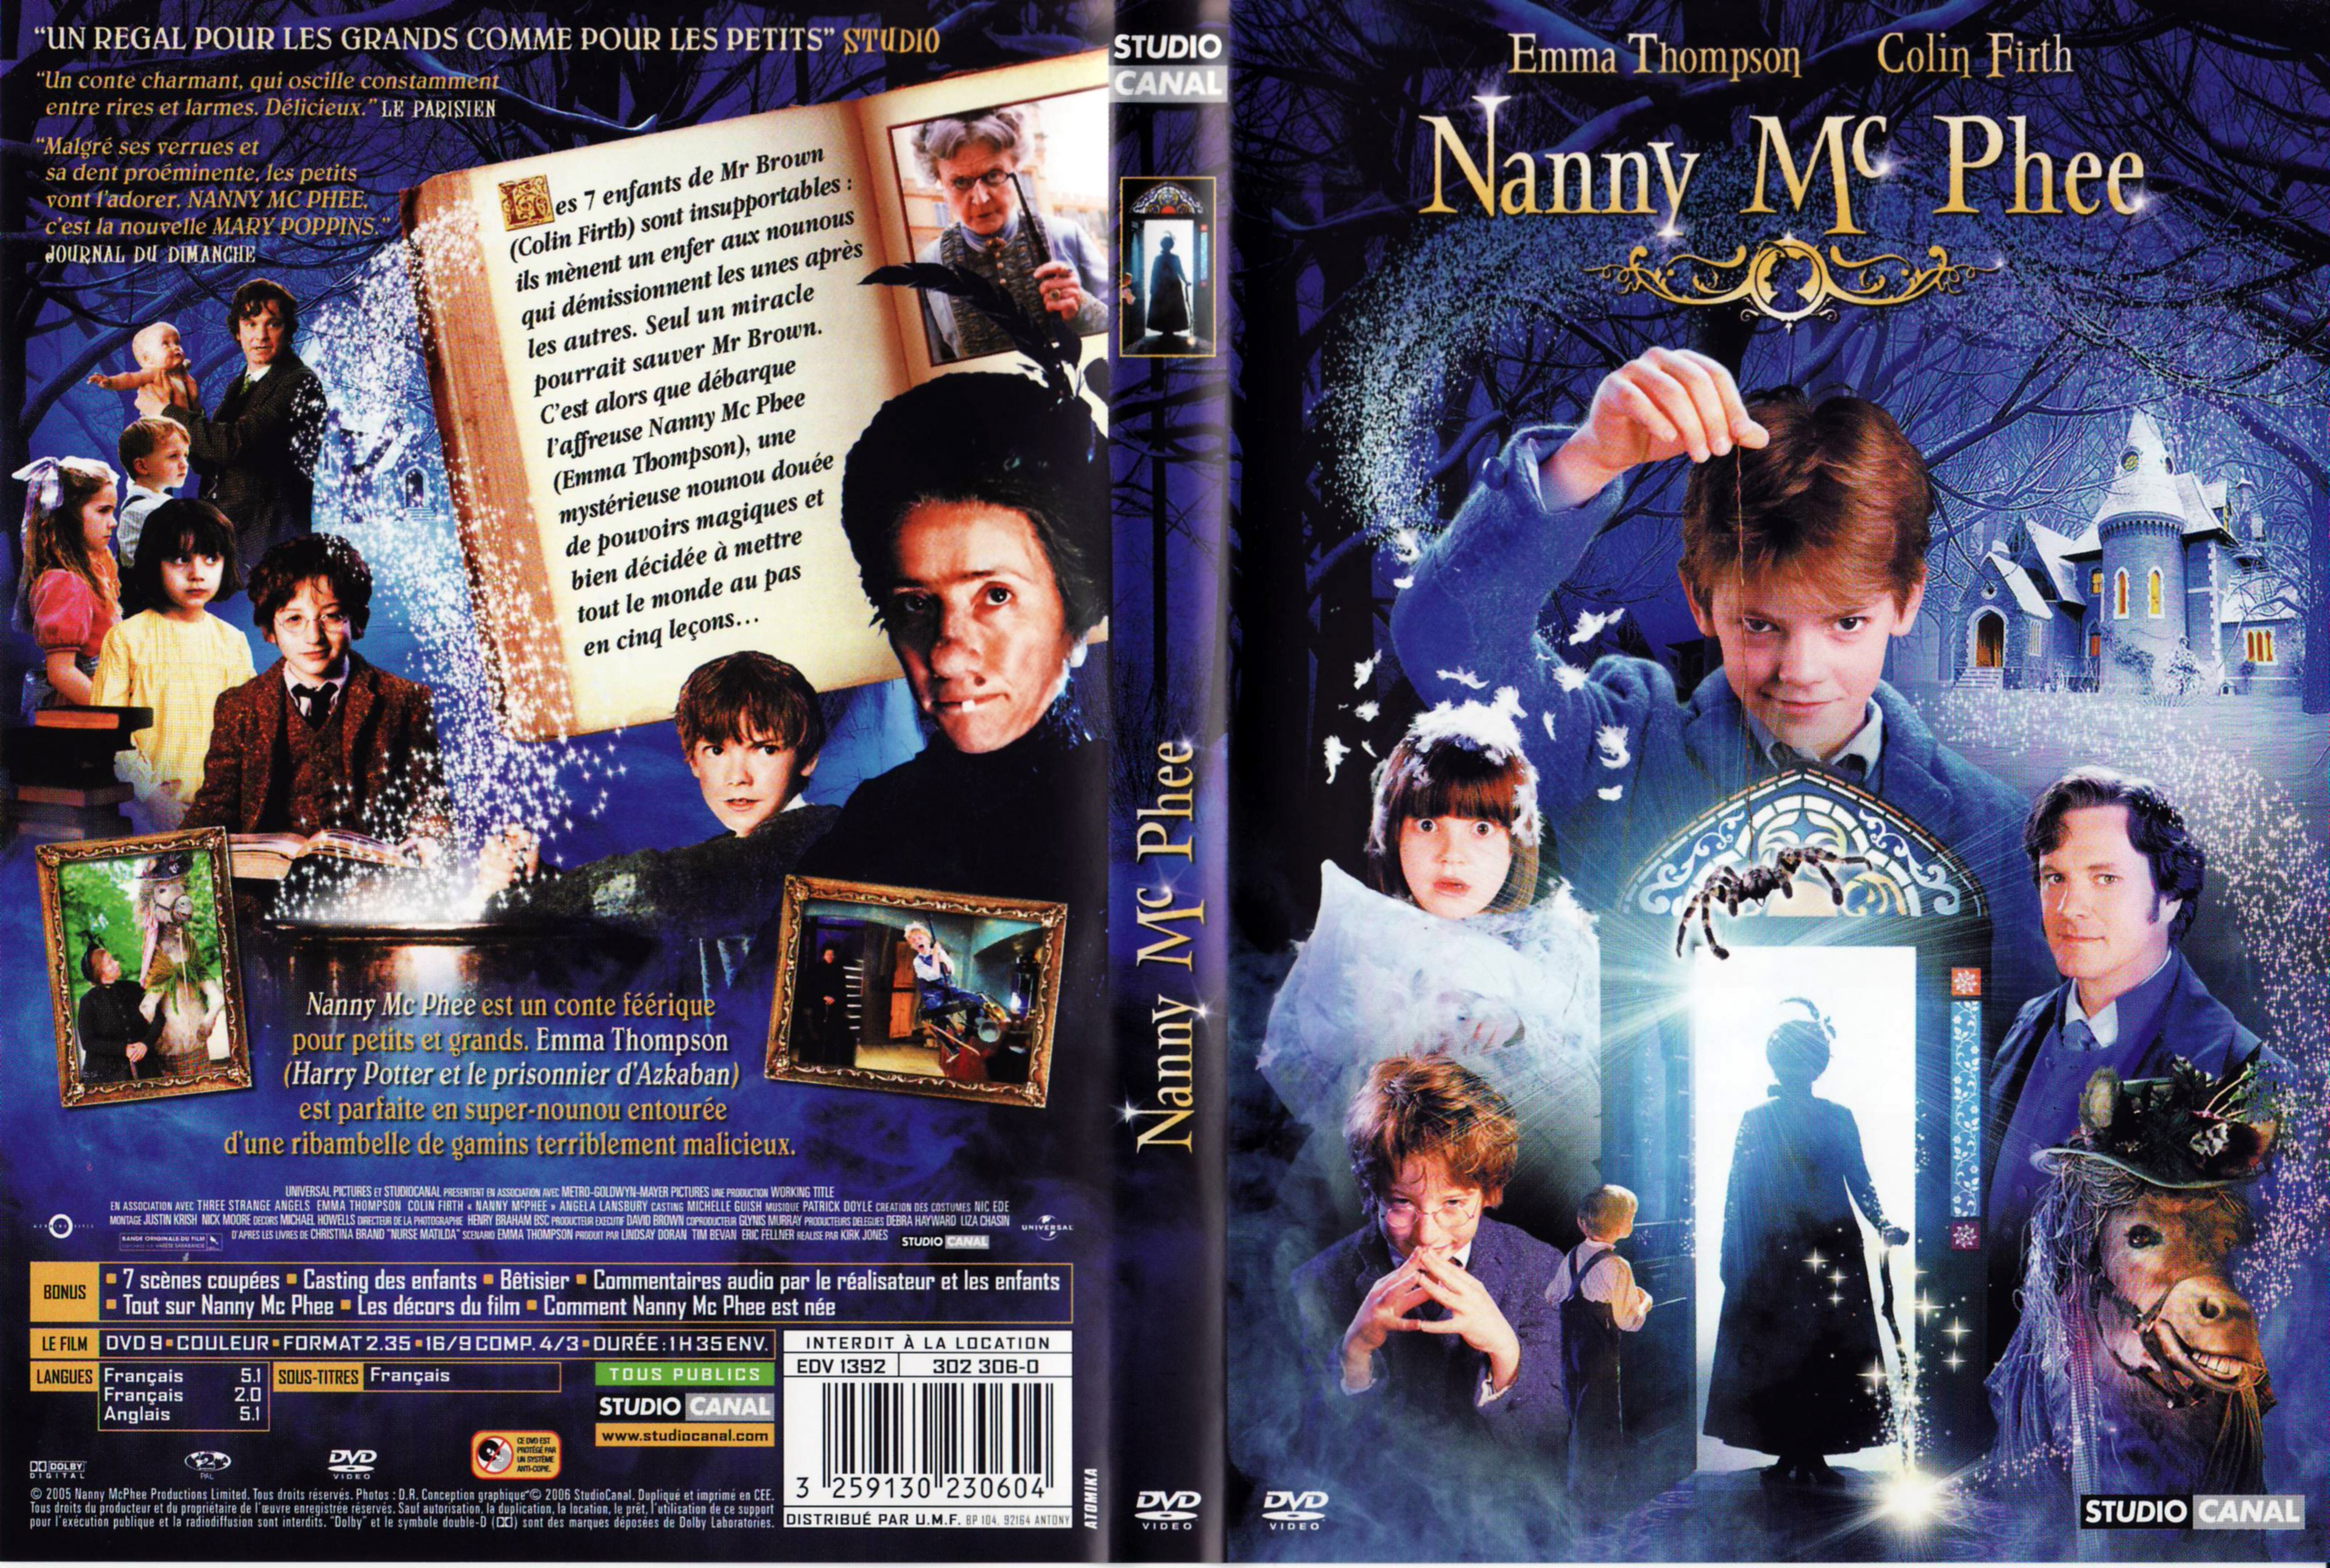 Jaquette DVD Nanny McPhee v3